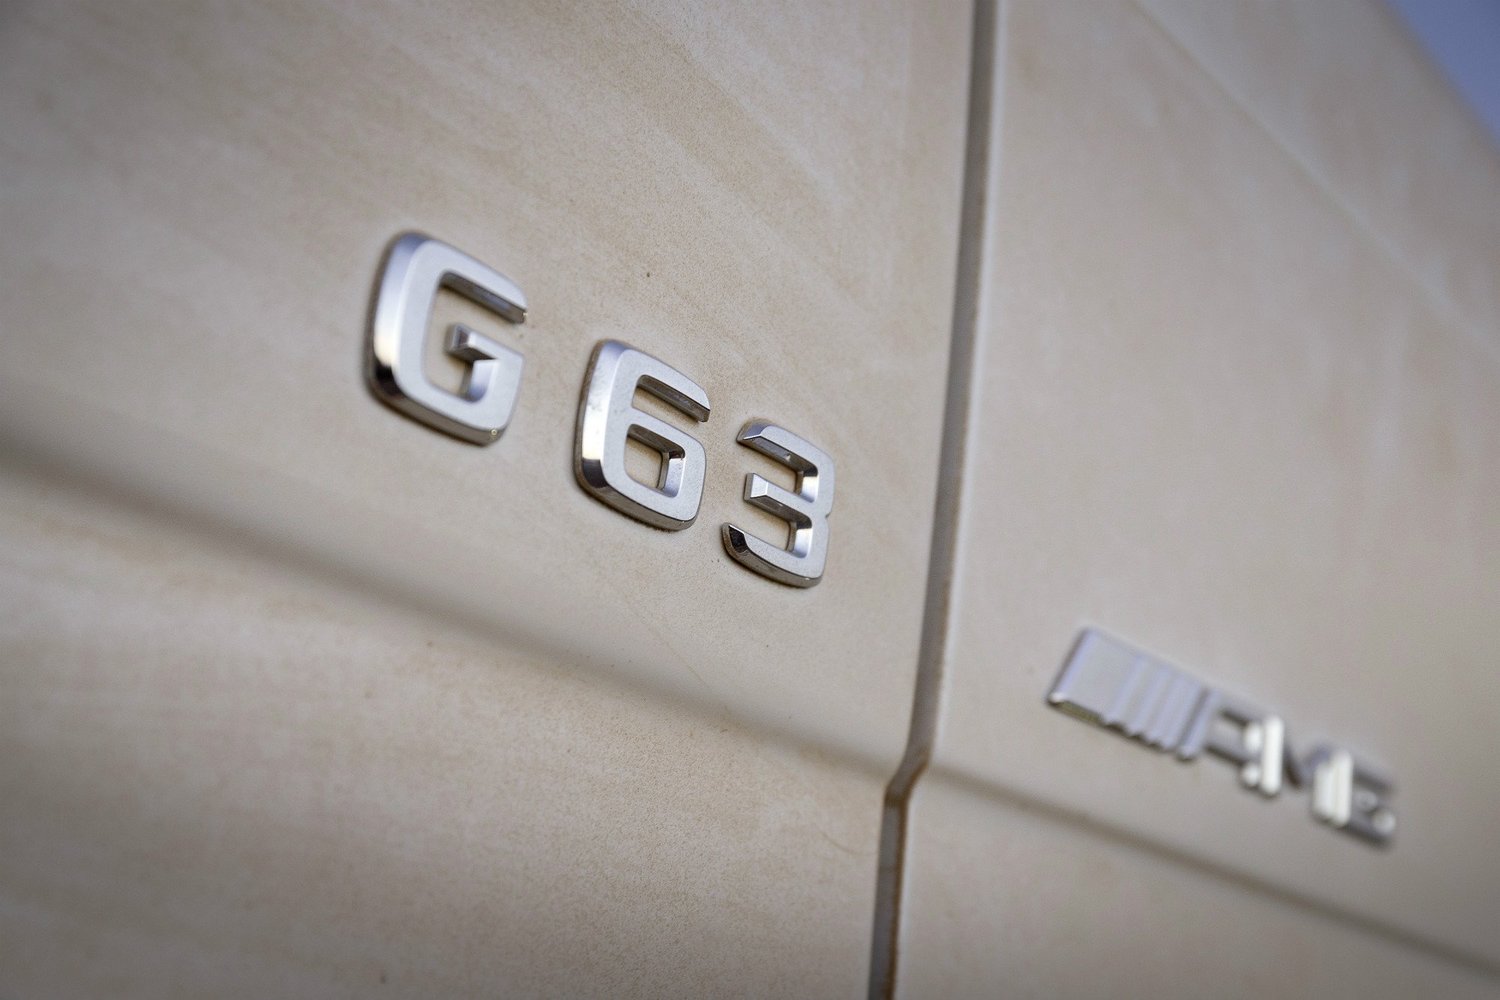 пикап Mercedes-Benz G-klasse AMG 6x6 2013 - 2016г выпуска модификация G63 AMG 6x6 5.5 AT (544 л.с.) 4×4